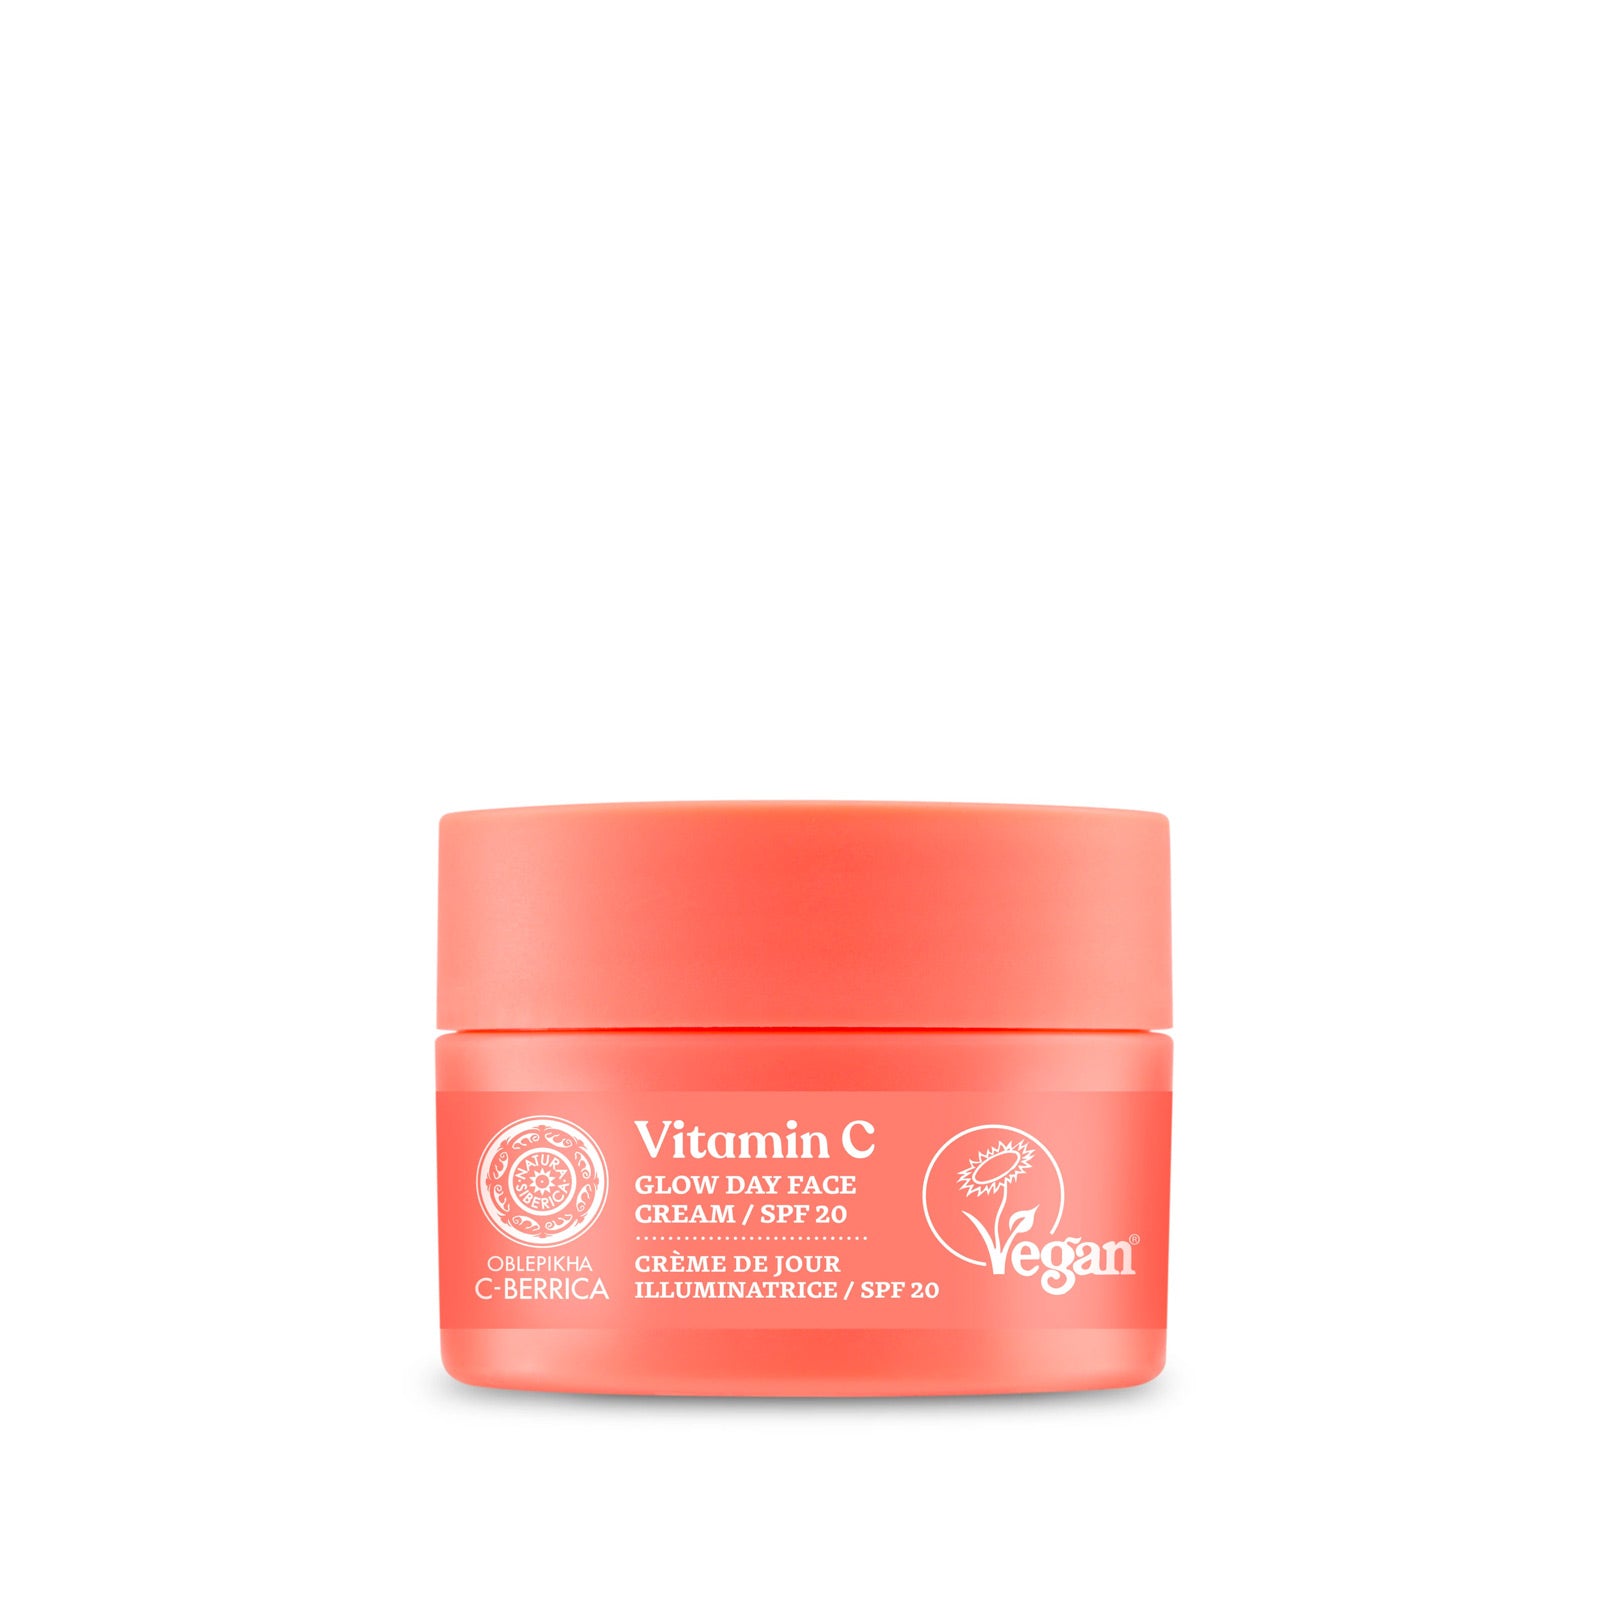 C-Berrica Glow Day Face Cream with SPF20, 50 ml